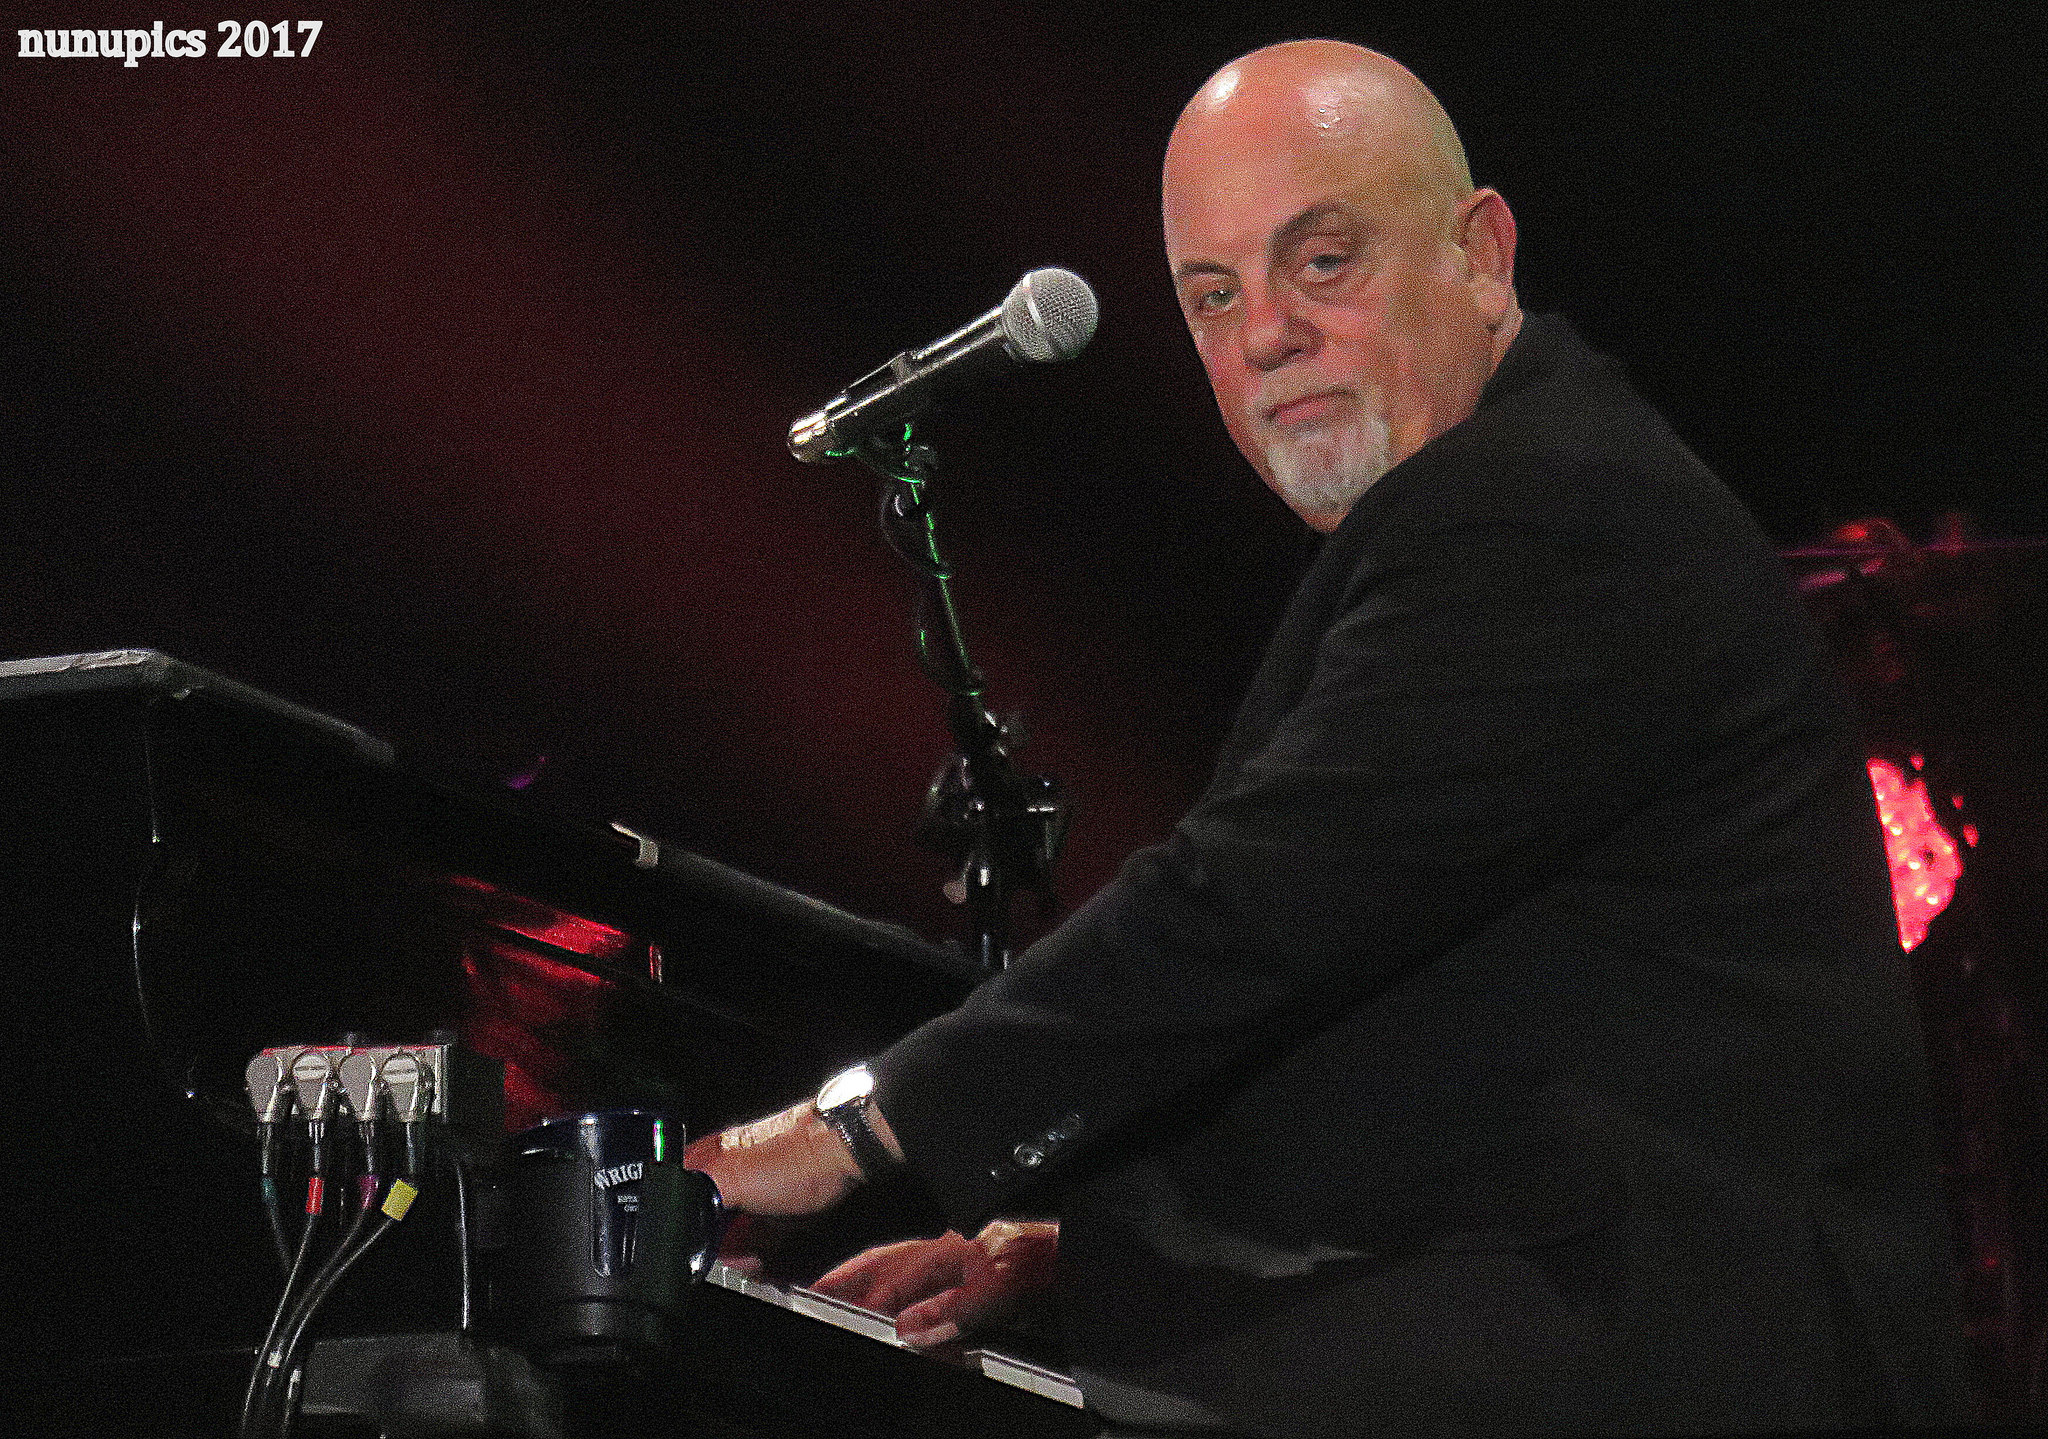 Photos / Video / Setlist | Billy Joel @ Wrigley Field 8/11/17